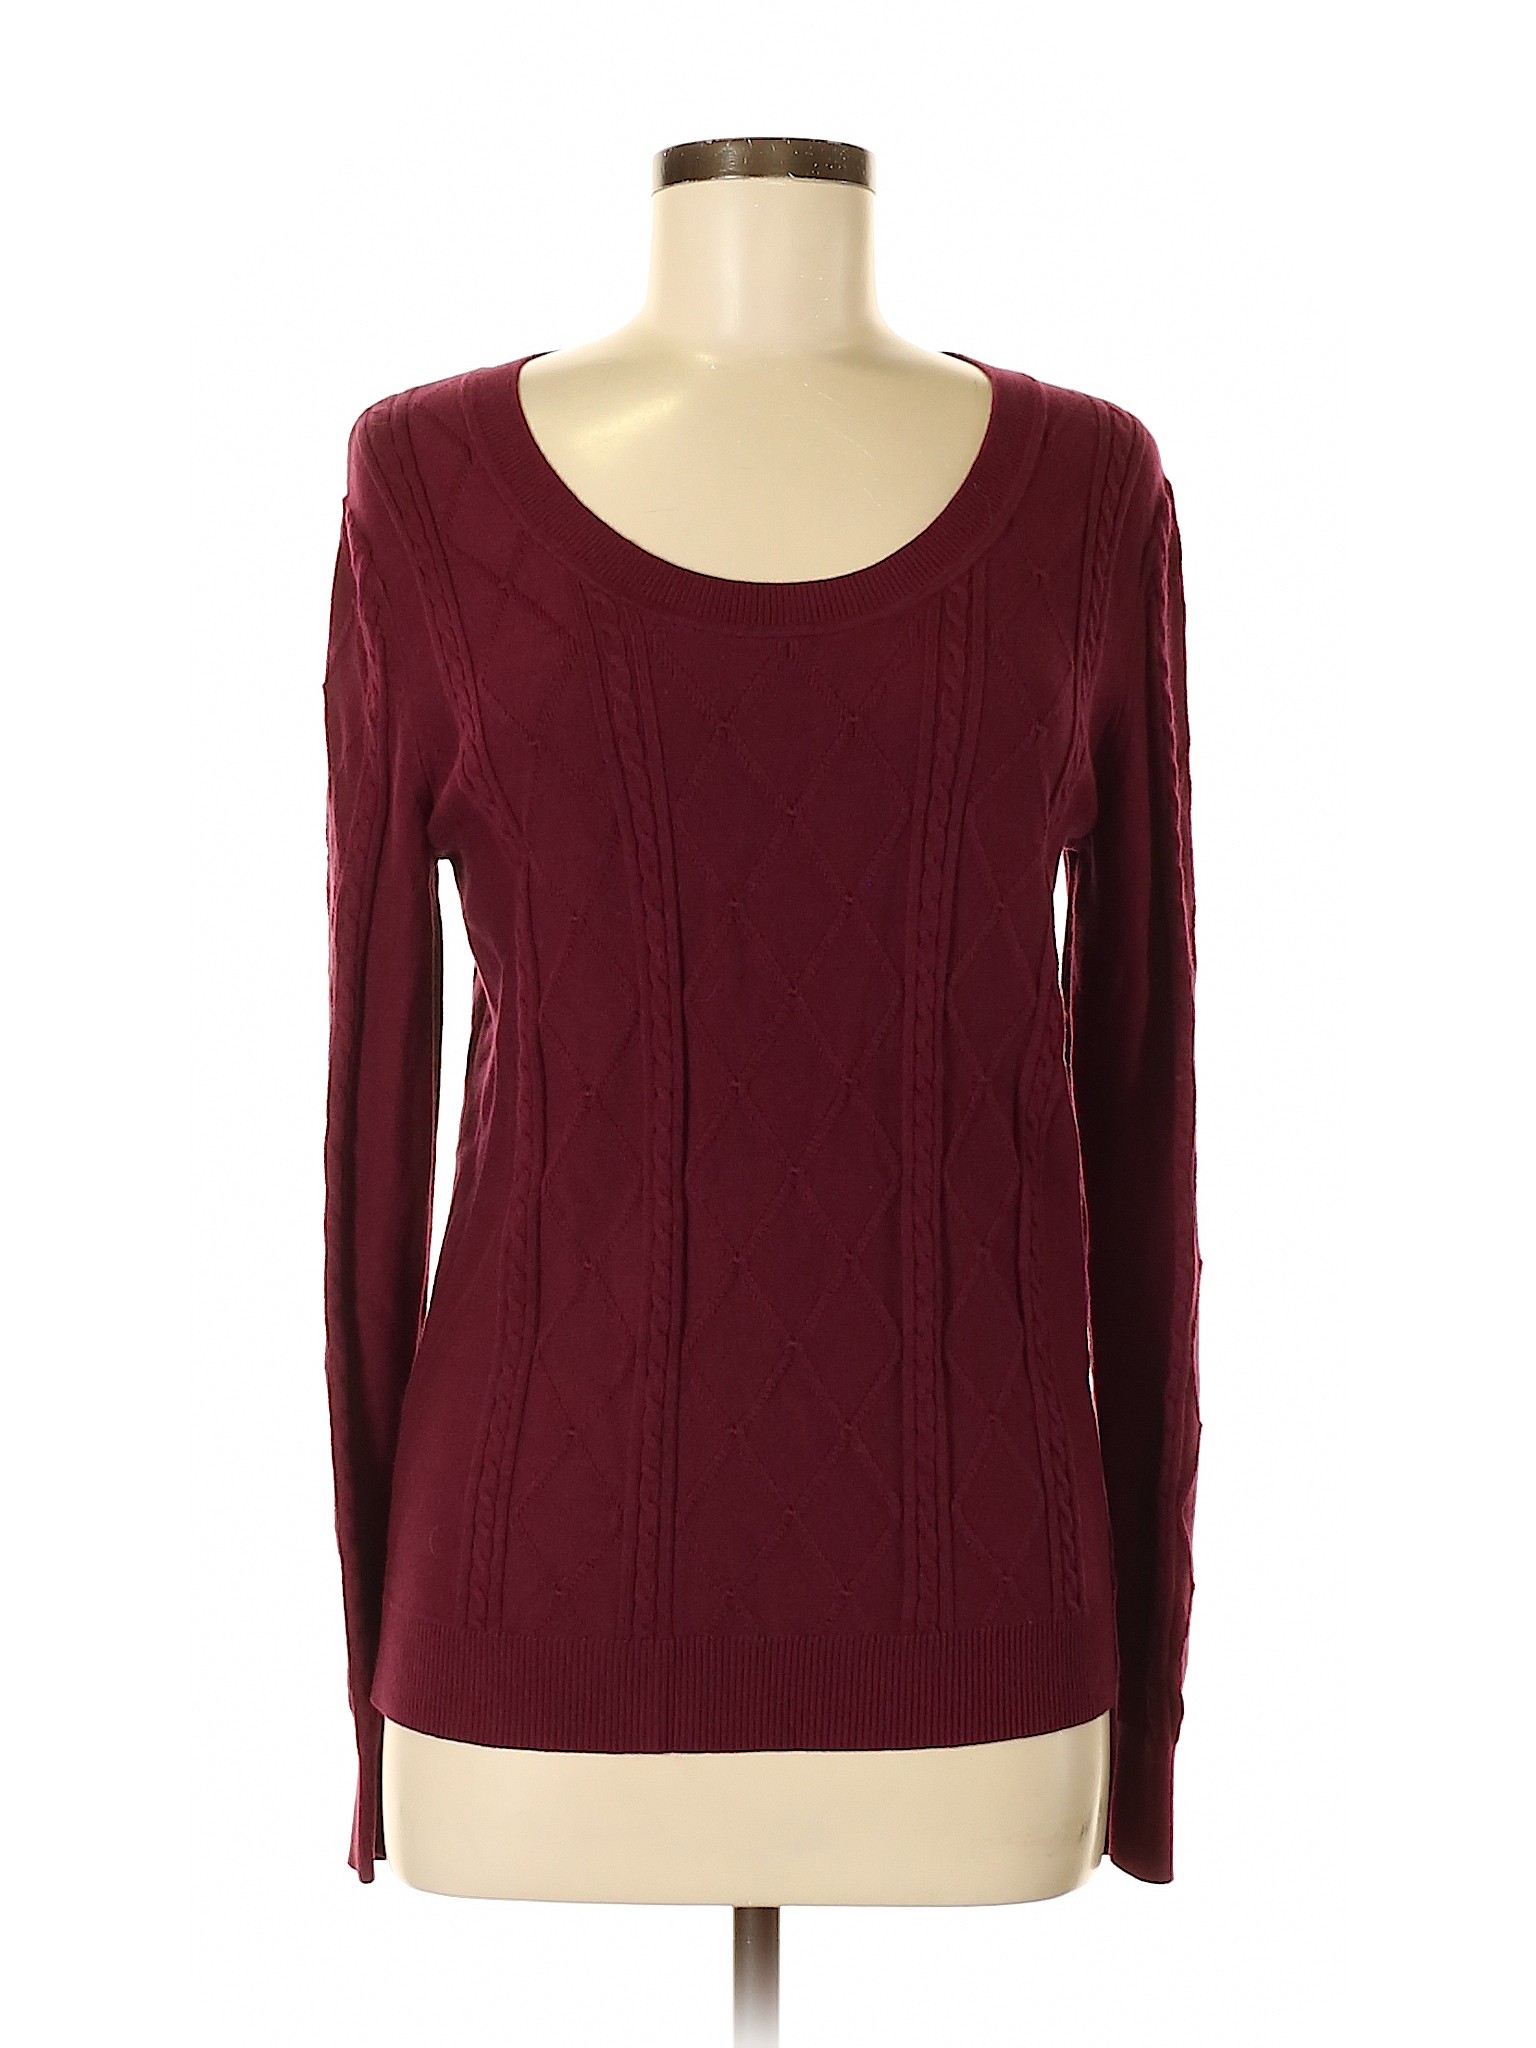 Banana Republic Factory Store Women Red Pullover Sweater M | eBay